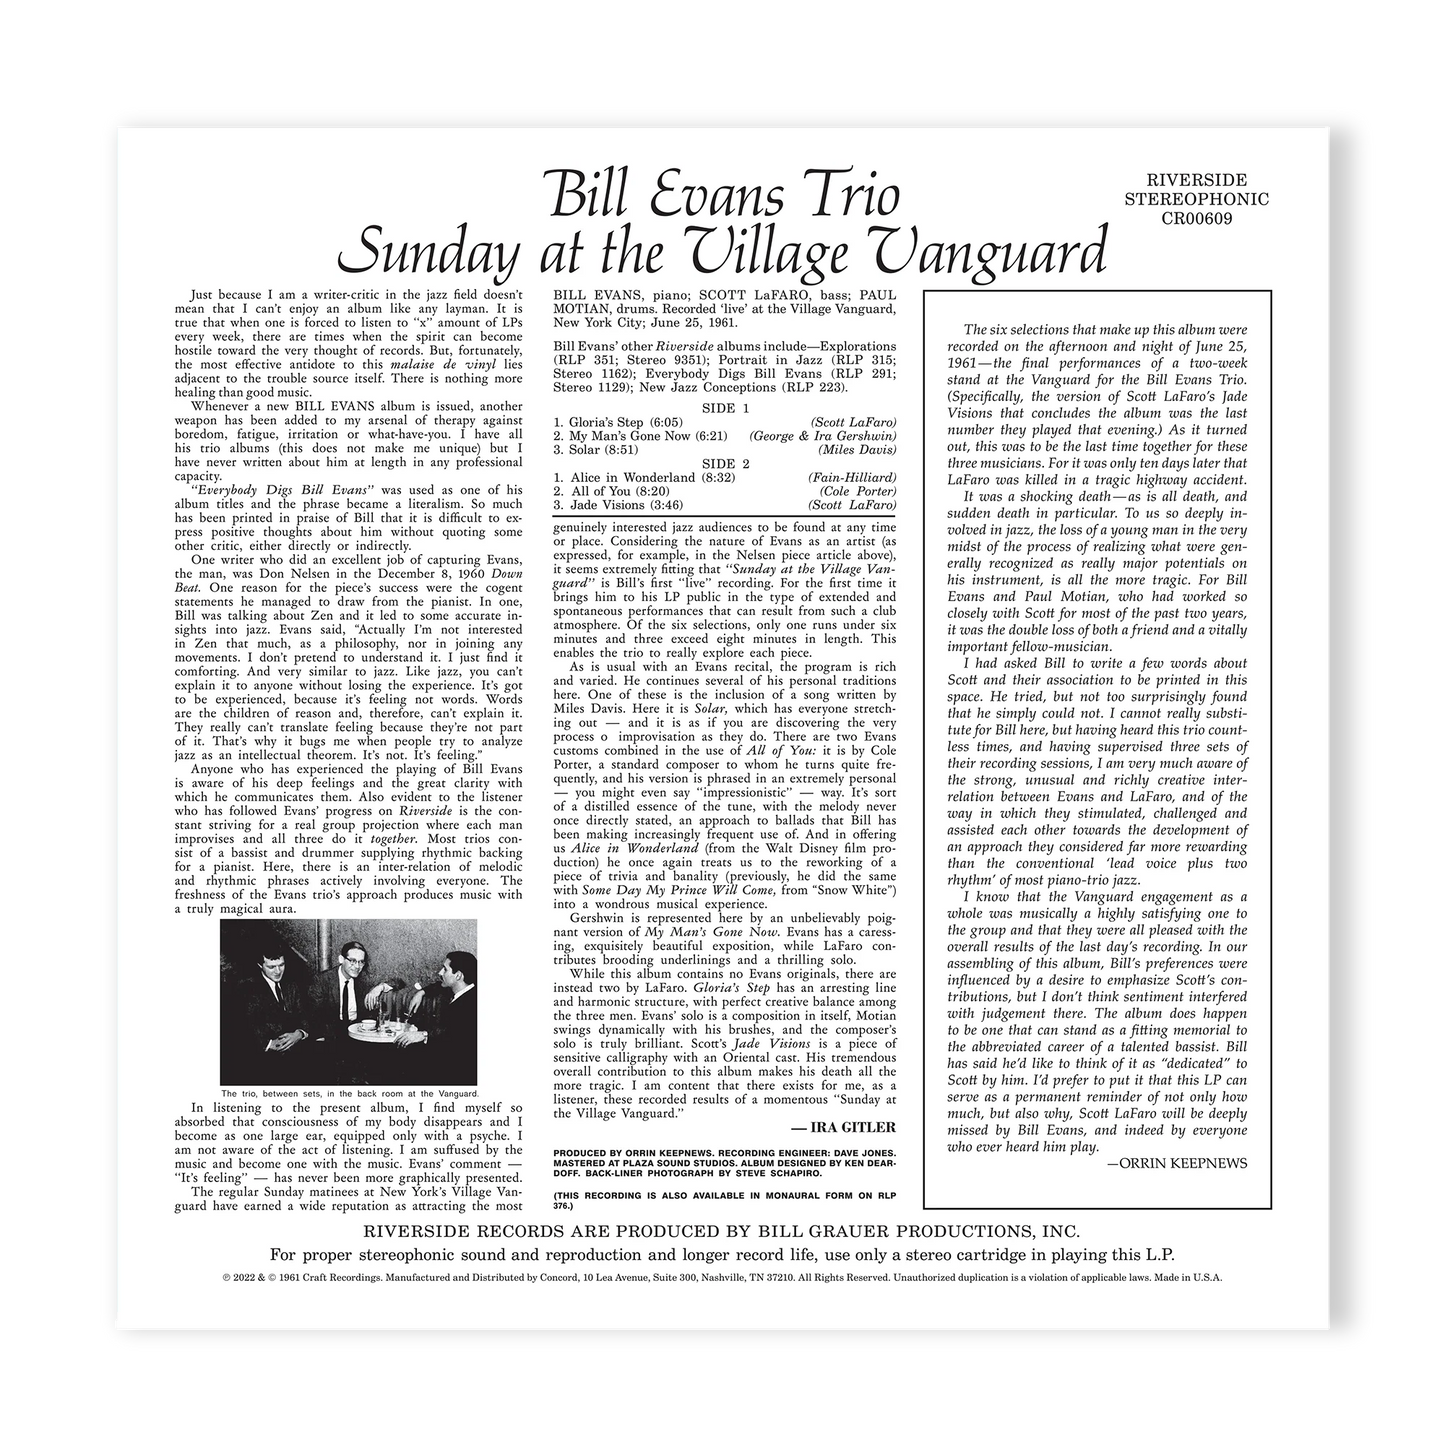 (Pre-pedido) Bill Evans Trio - Sunday at the Village Vanguard - OJC LP